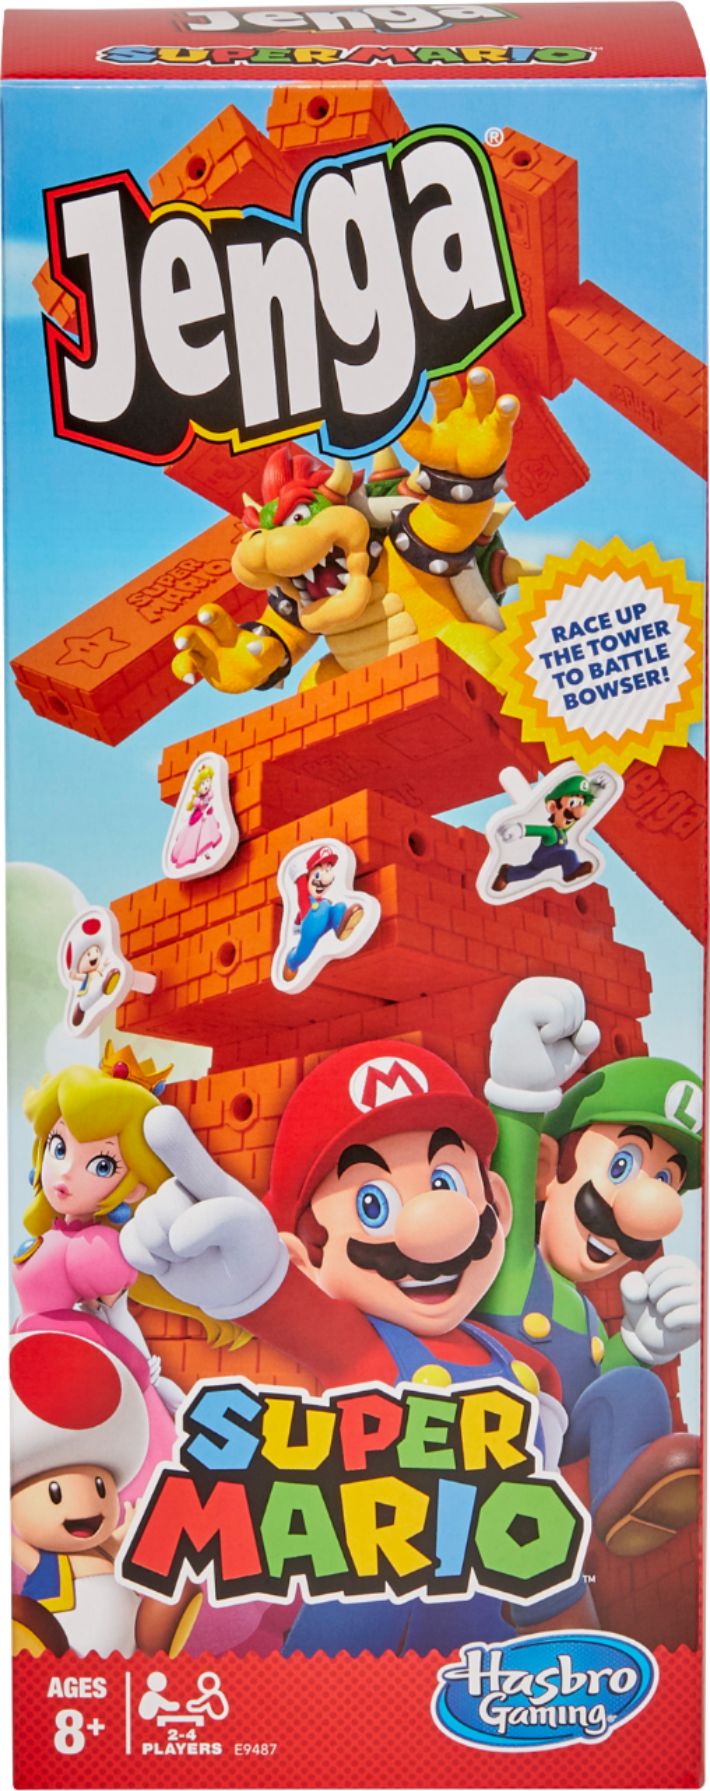 Nintendo Super Mario Anniversary Monopoly Jenga